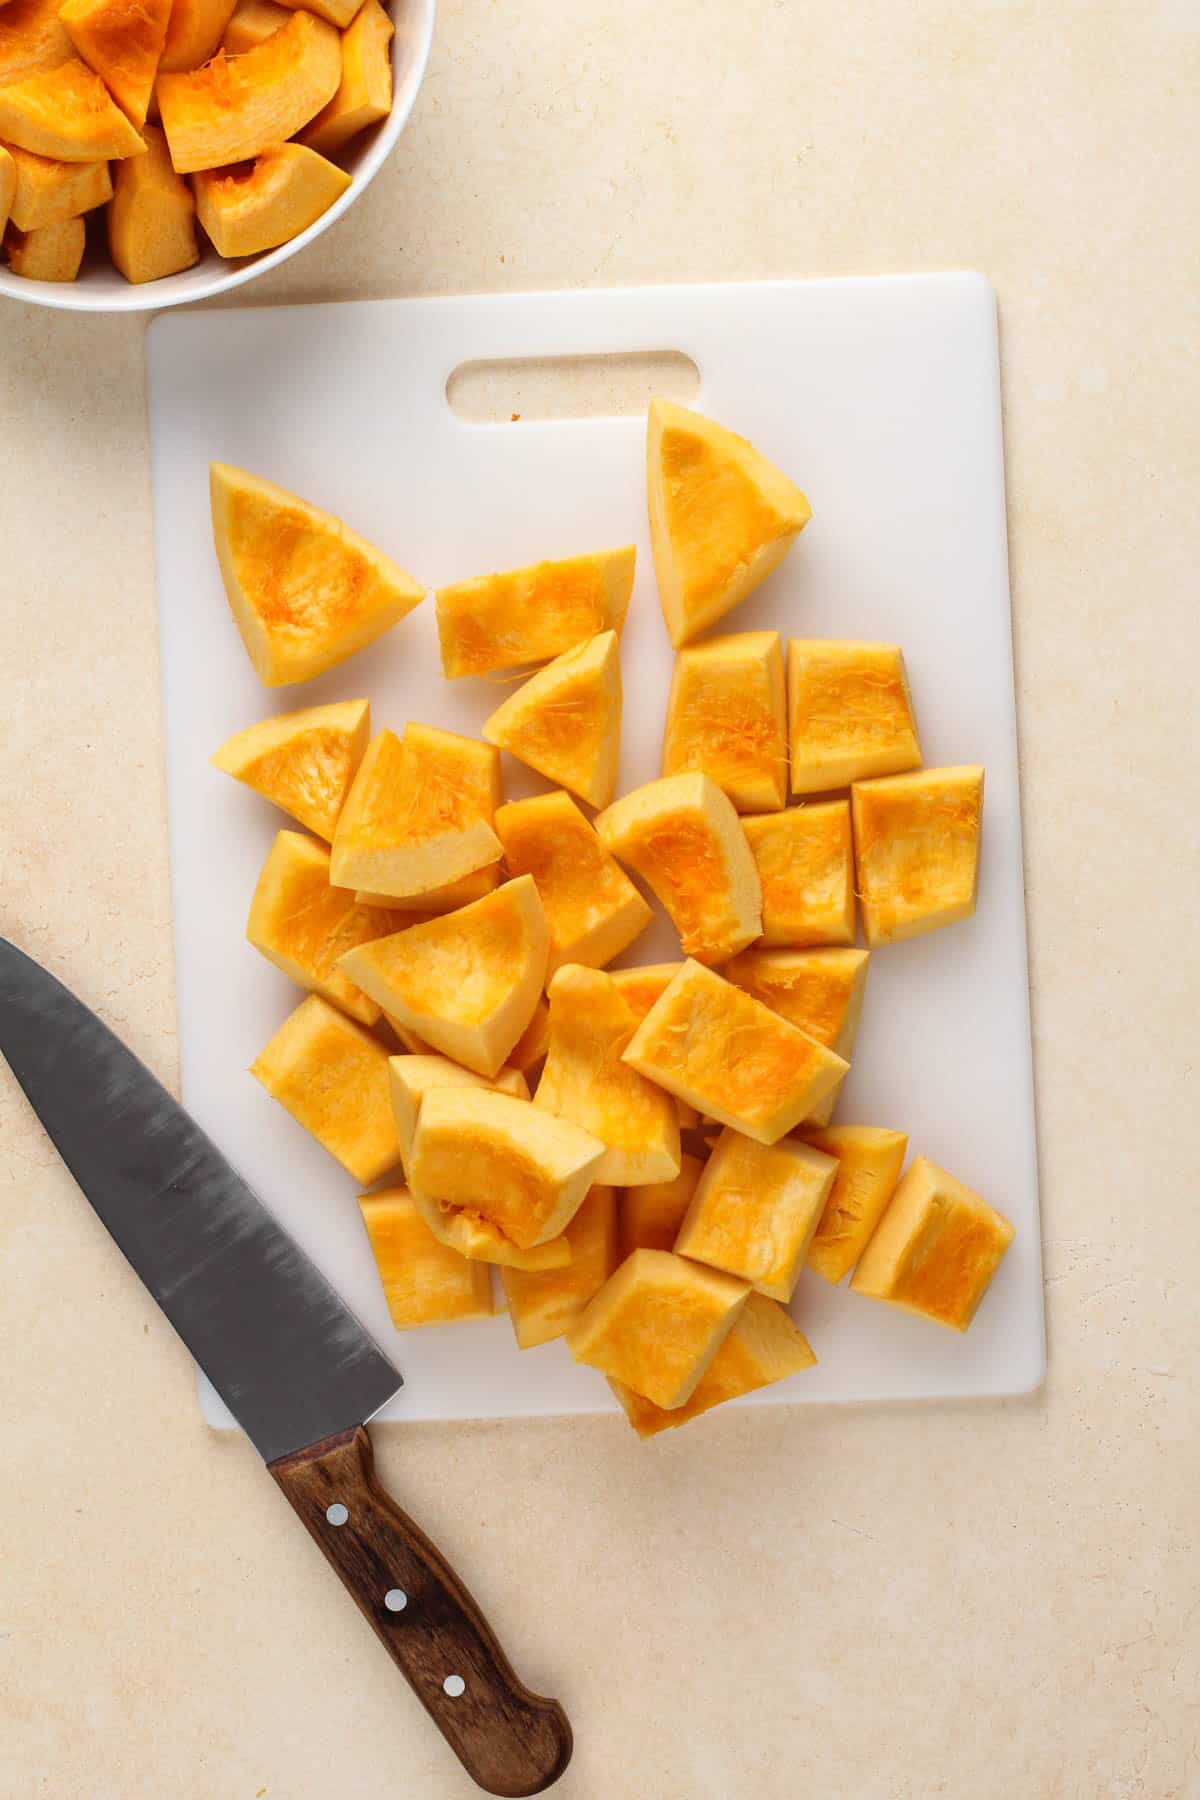 a knife and cut pumpkin on a cutting board